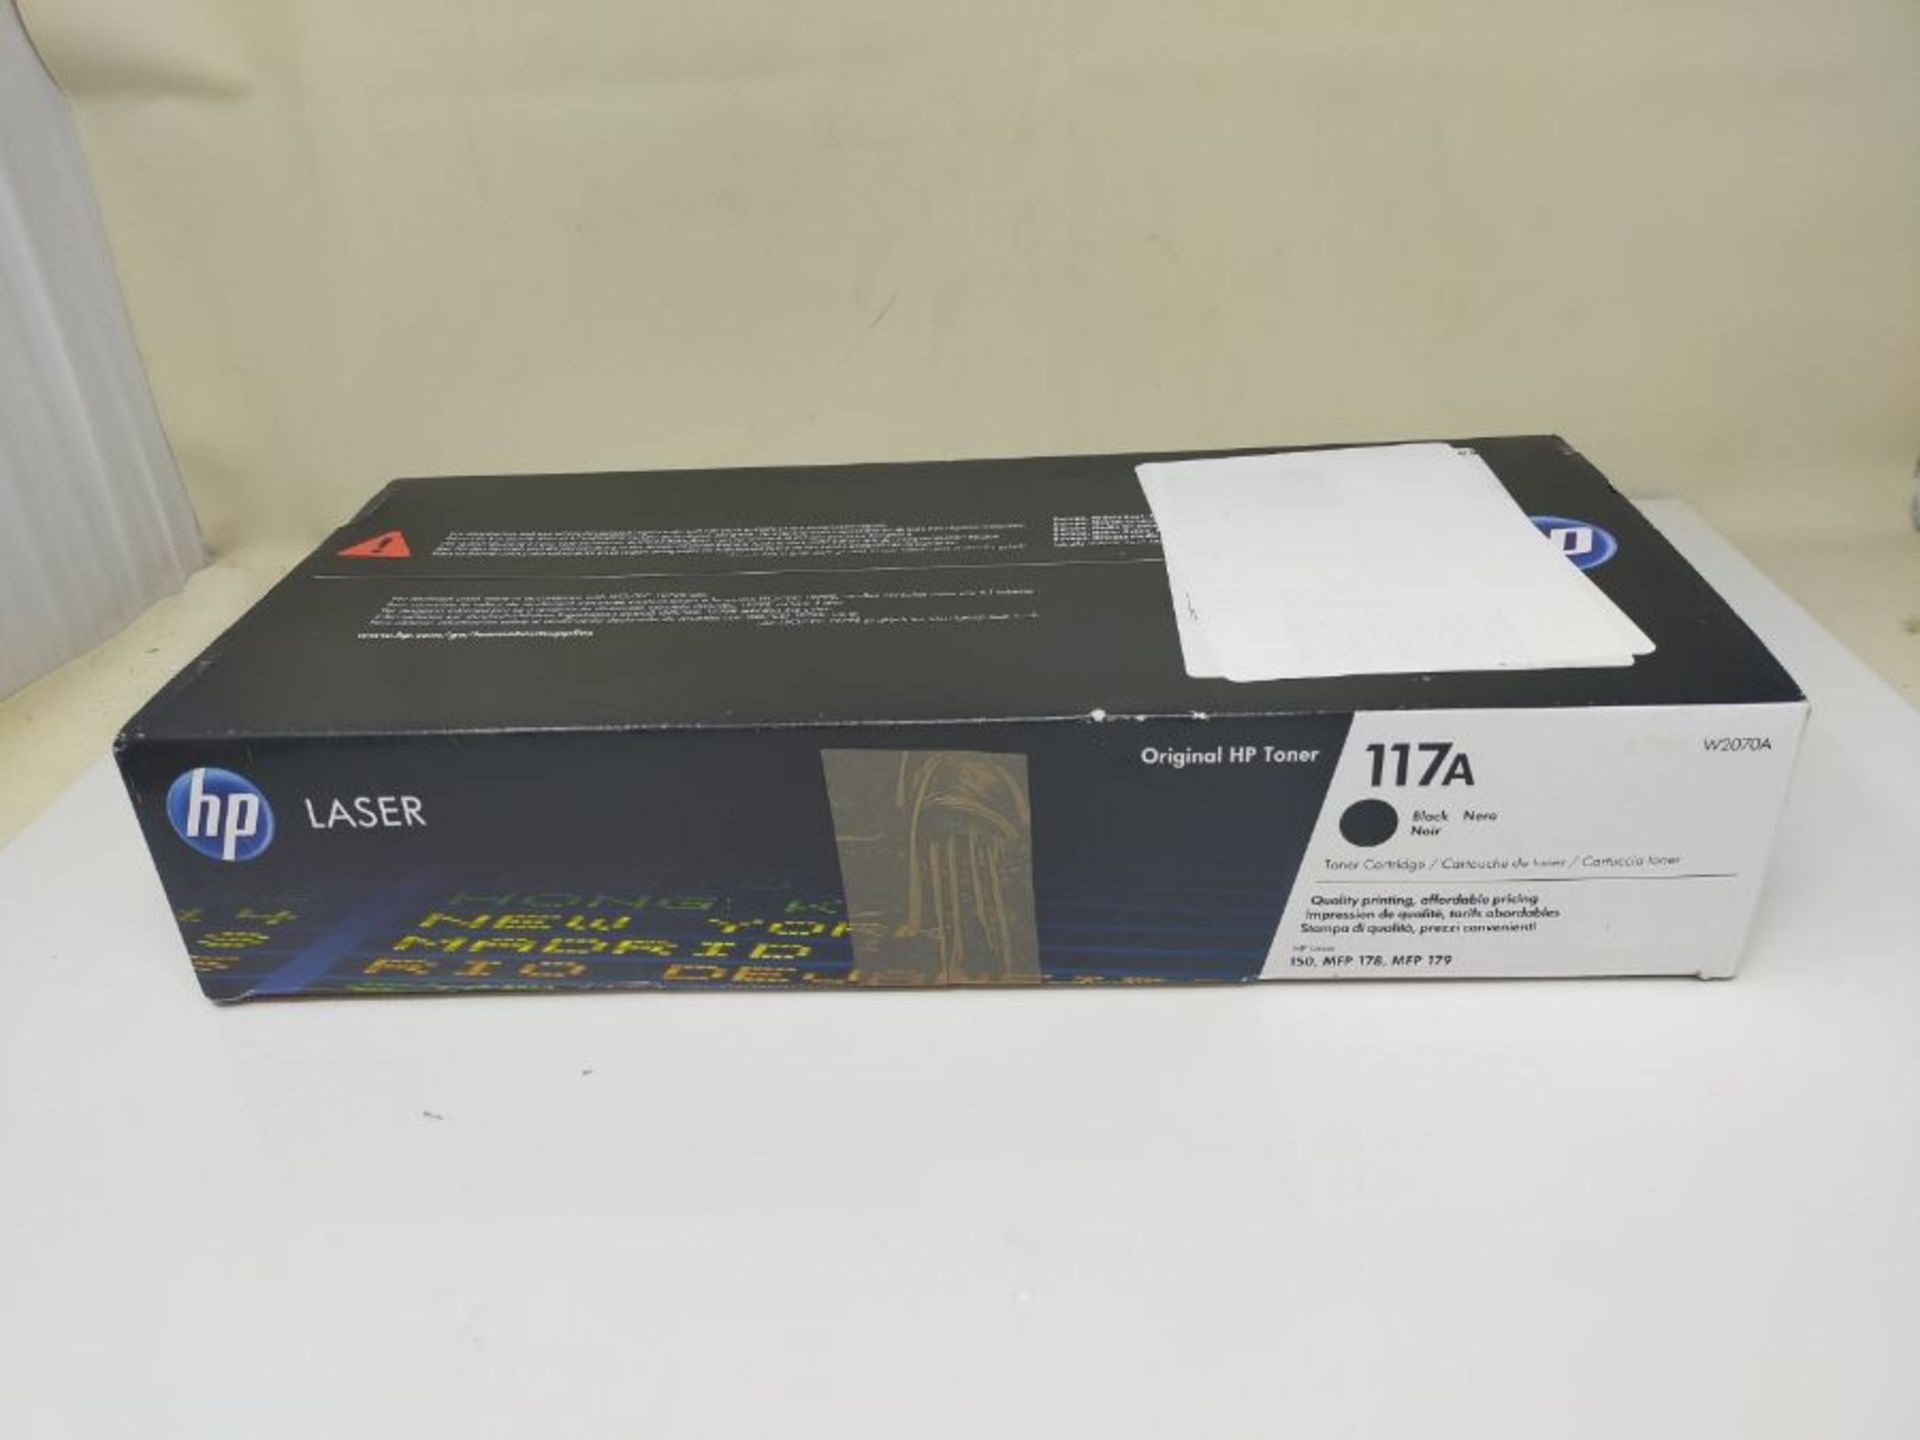 HP W2070A 117A Original Laser Toner Cartridge, Black, Single Pack - Image 2 of 3